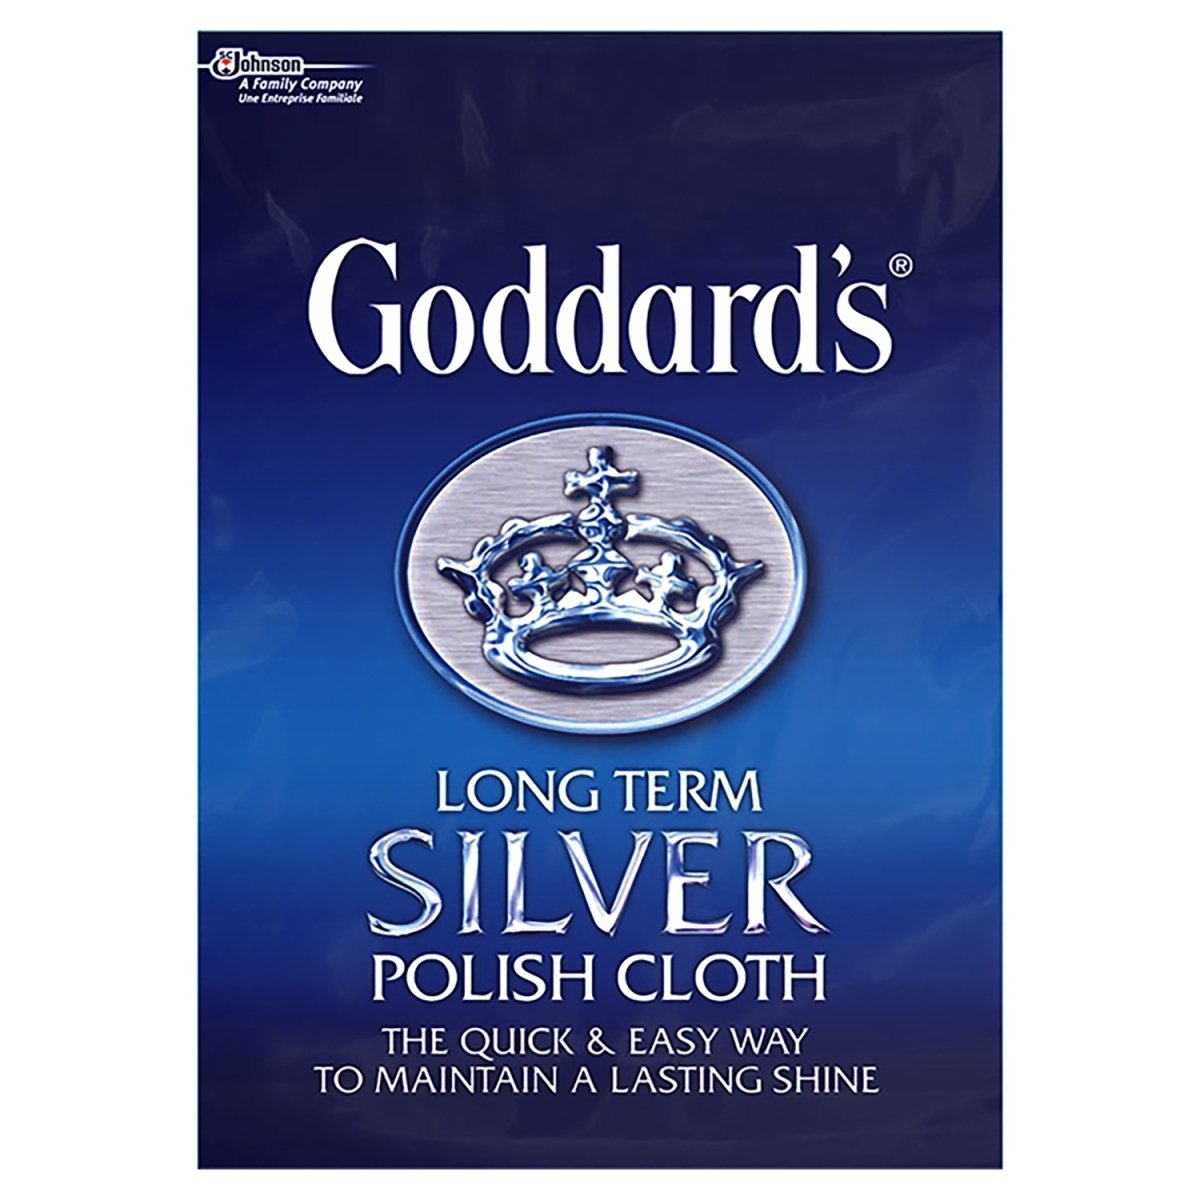 Goddard's Silver Polish, 5000204893762